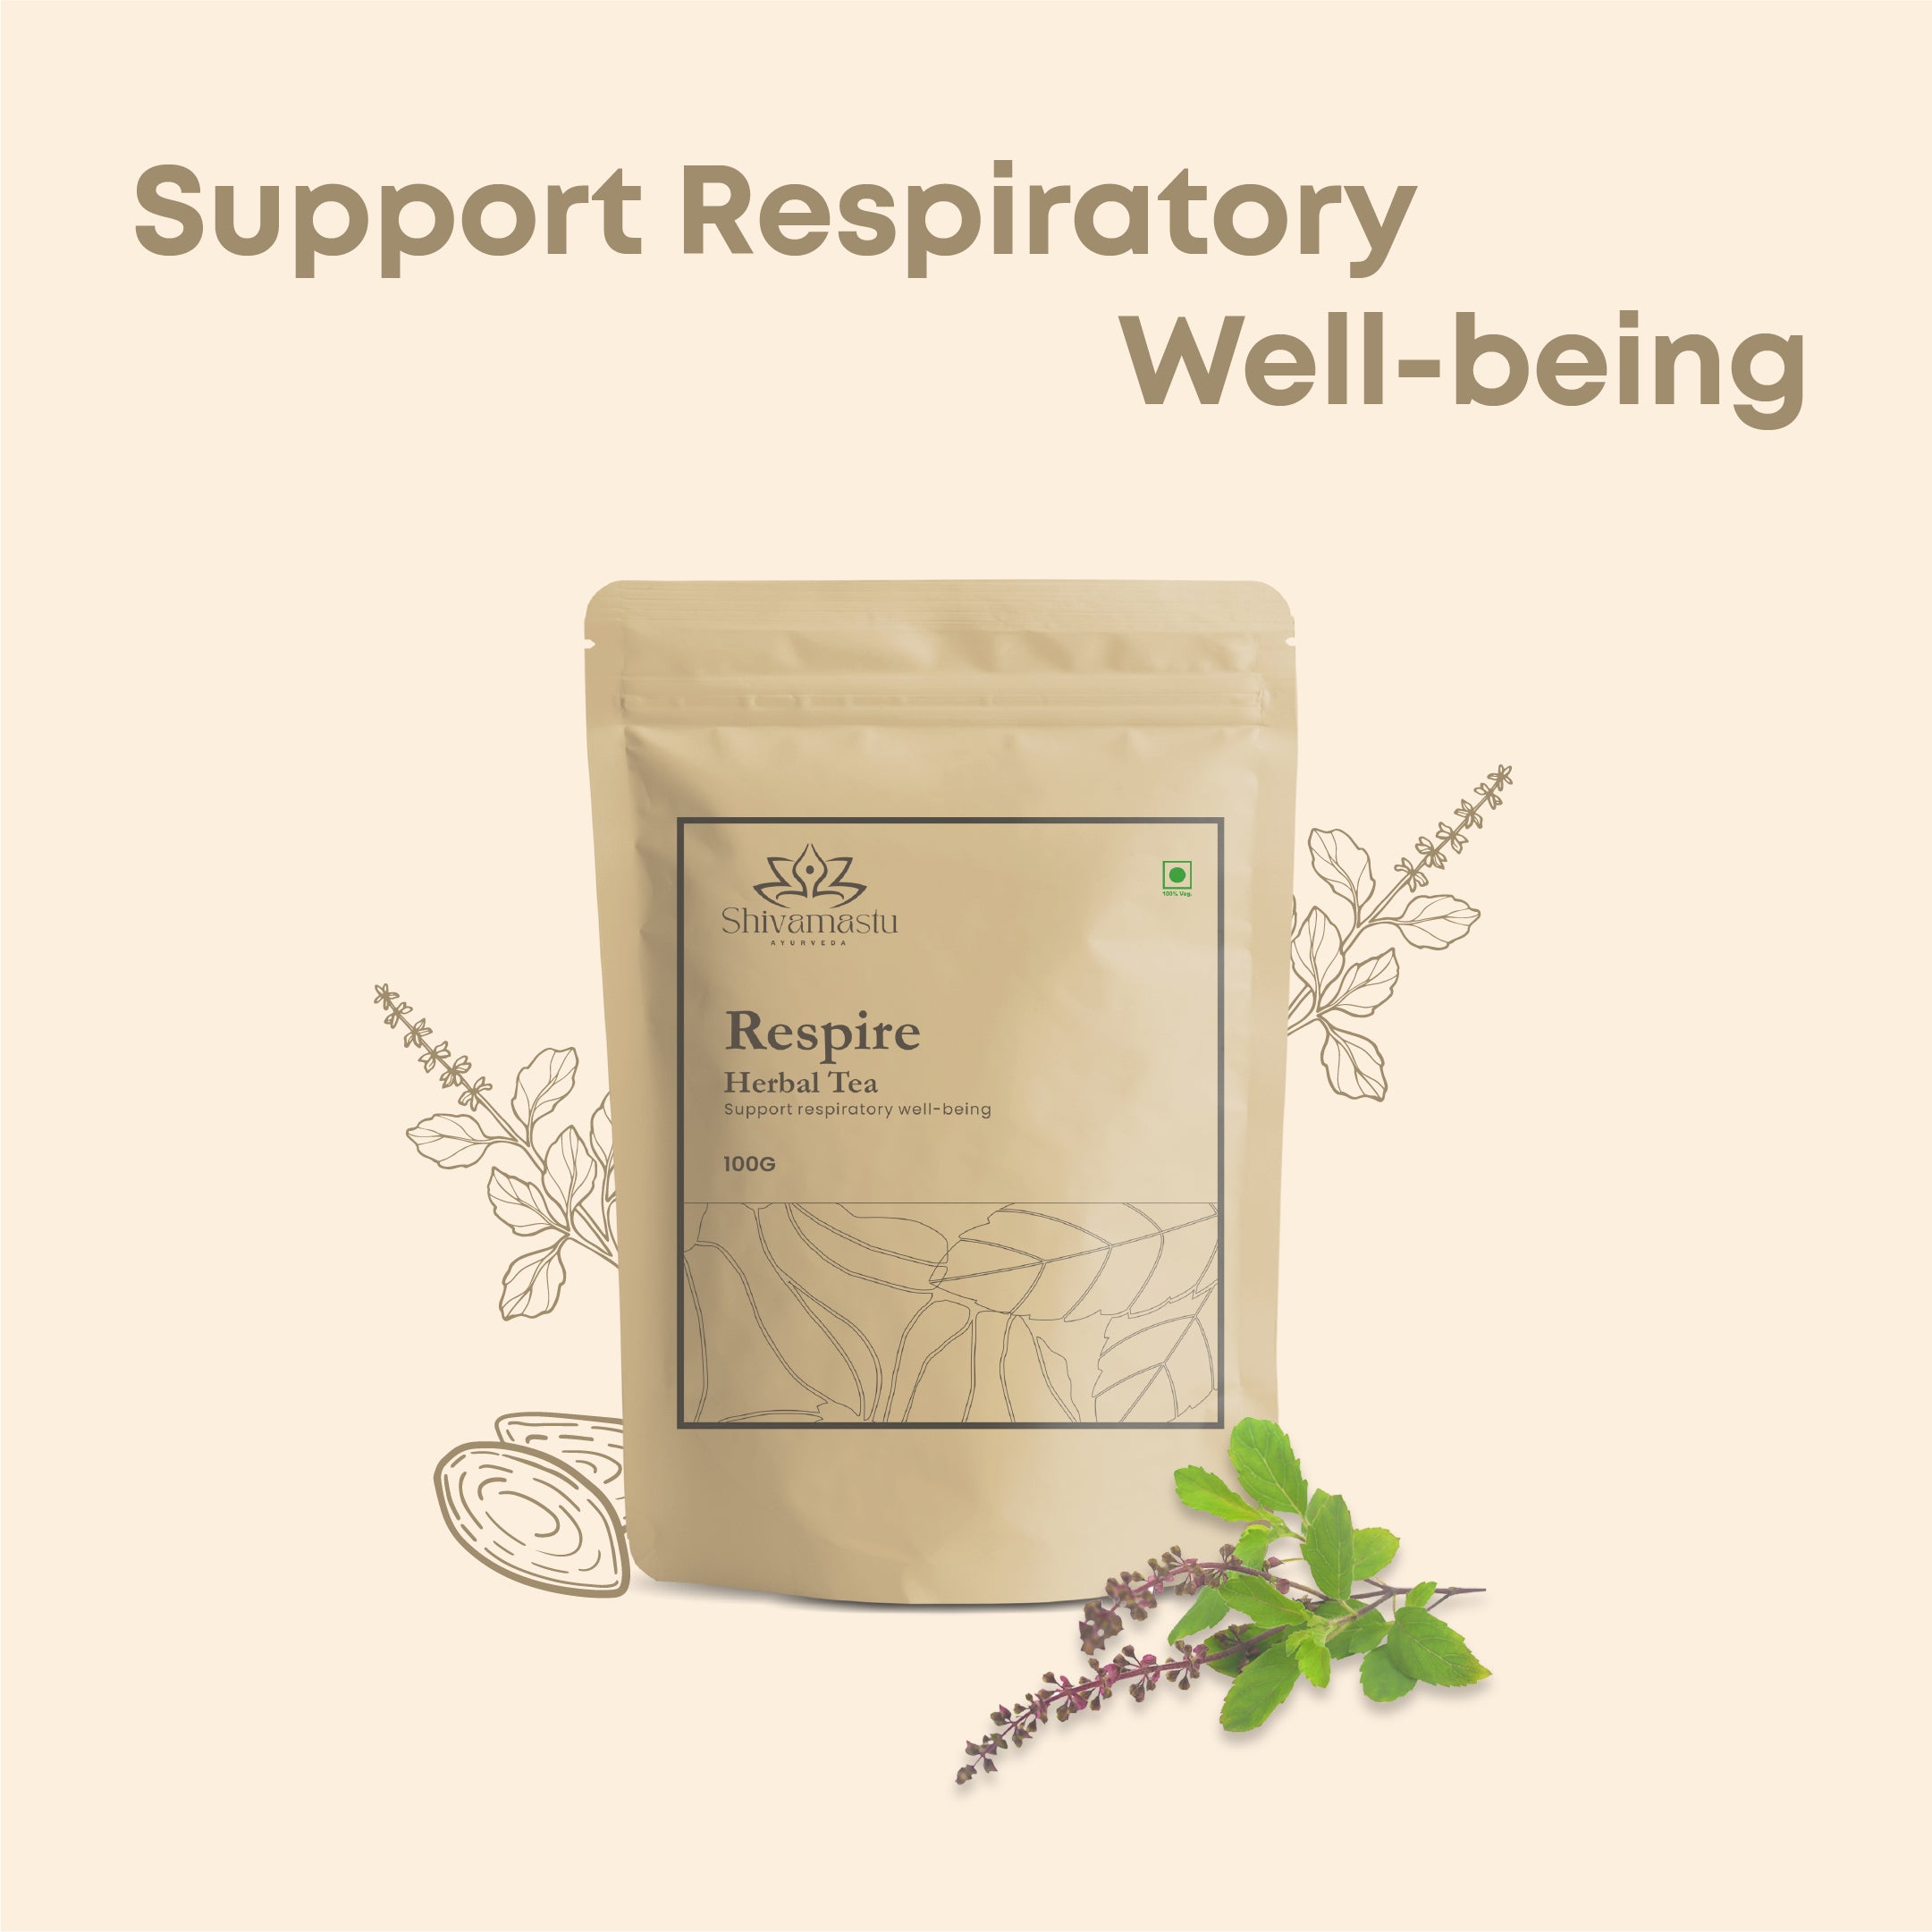 Respire Herbal Tea - 100 gm By Shivamastu Ayurveda